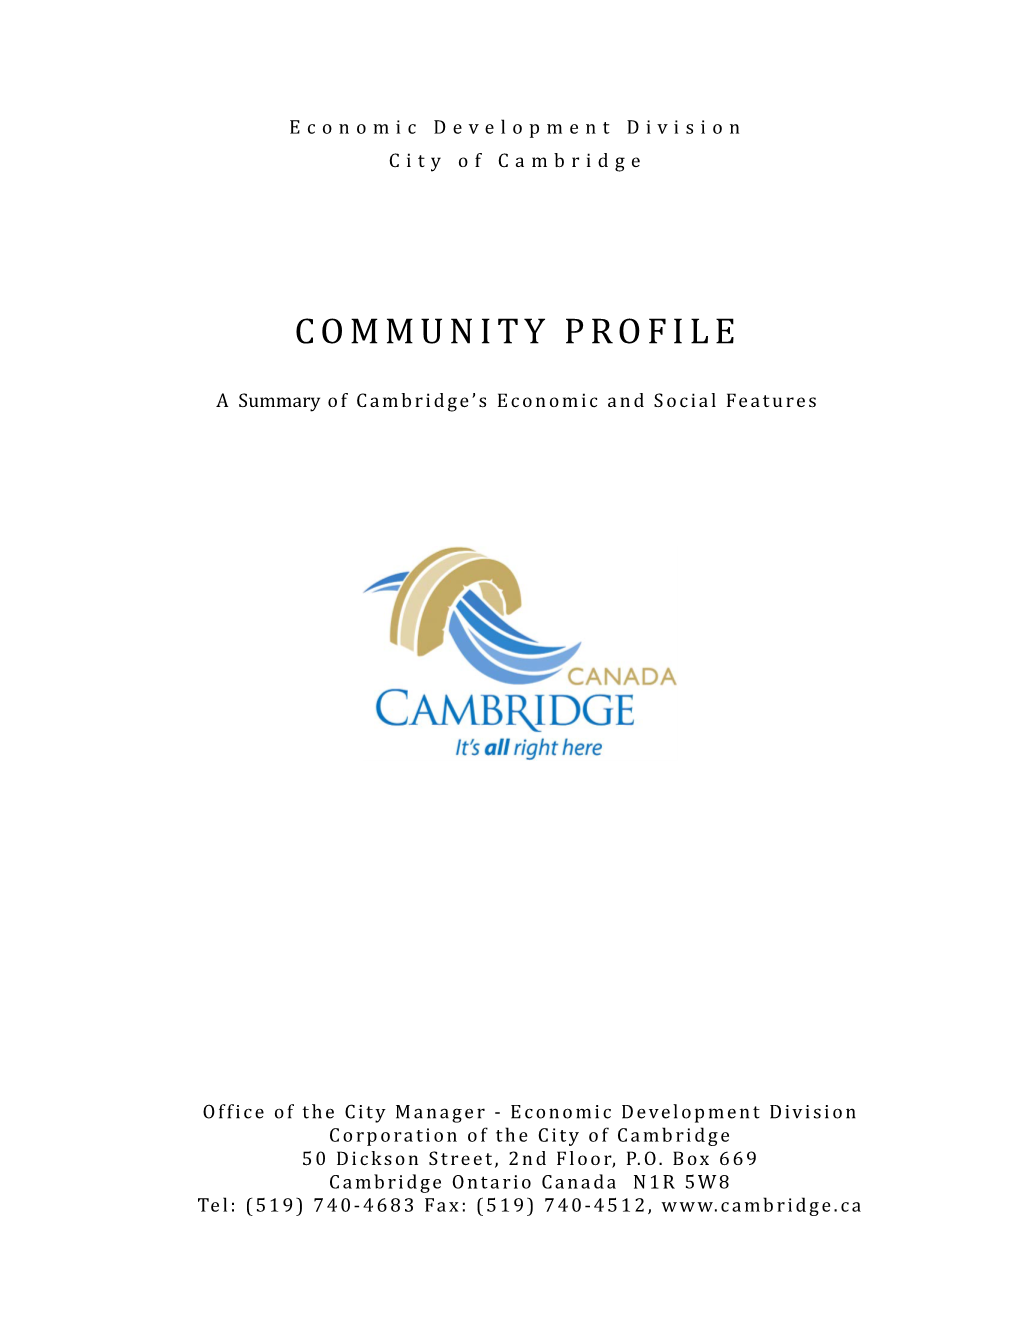 City of Cambridge 2016 Community Profile